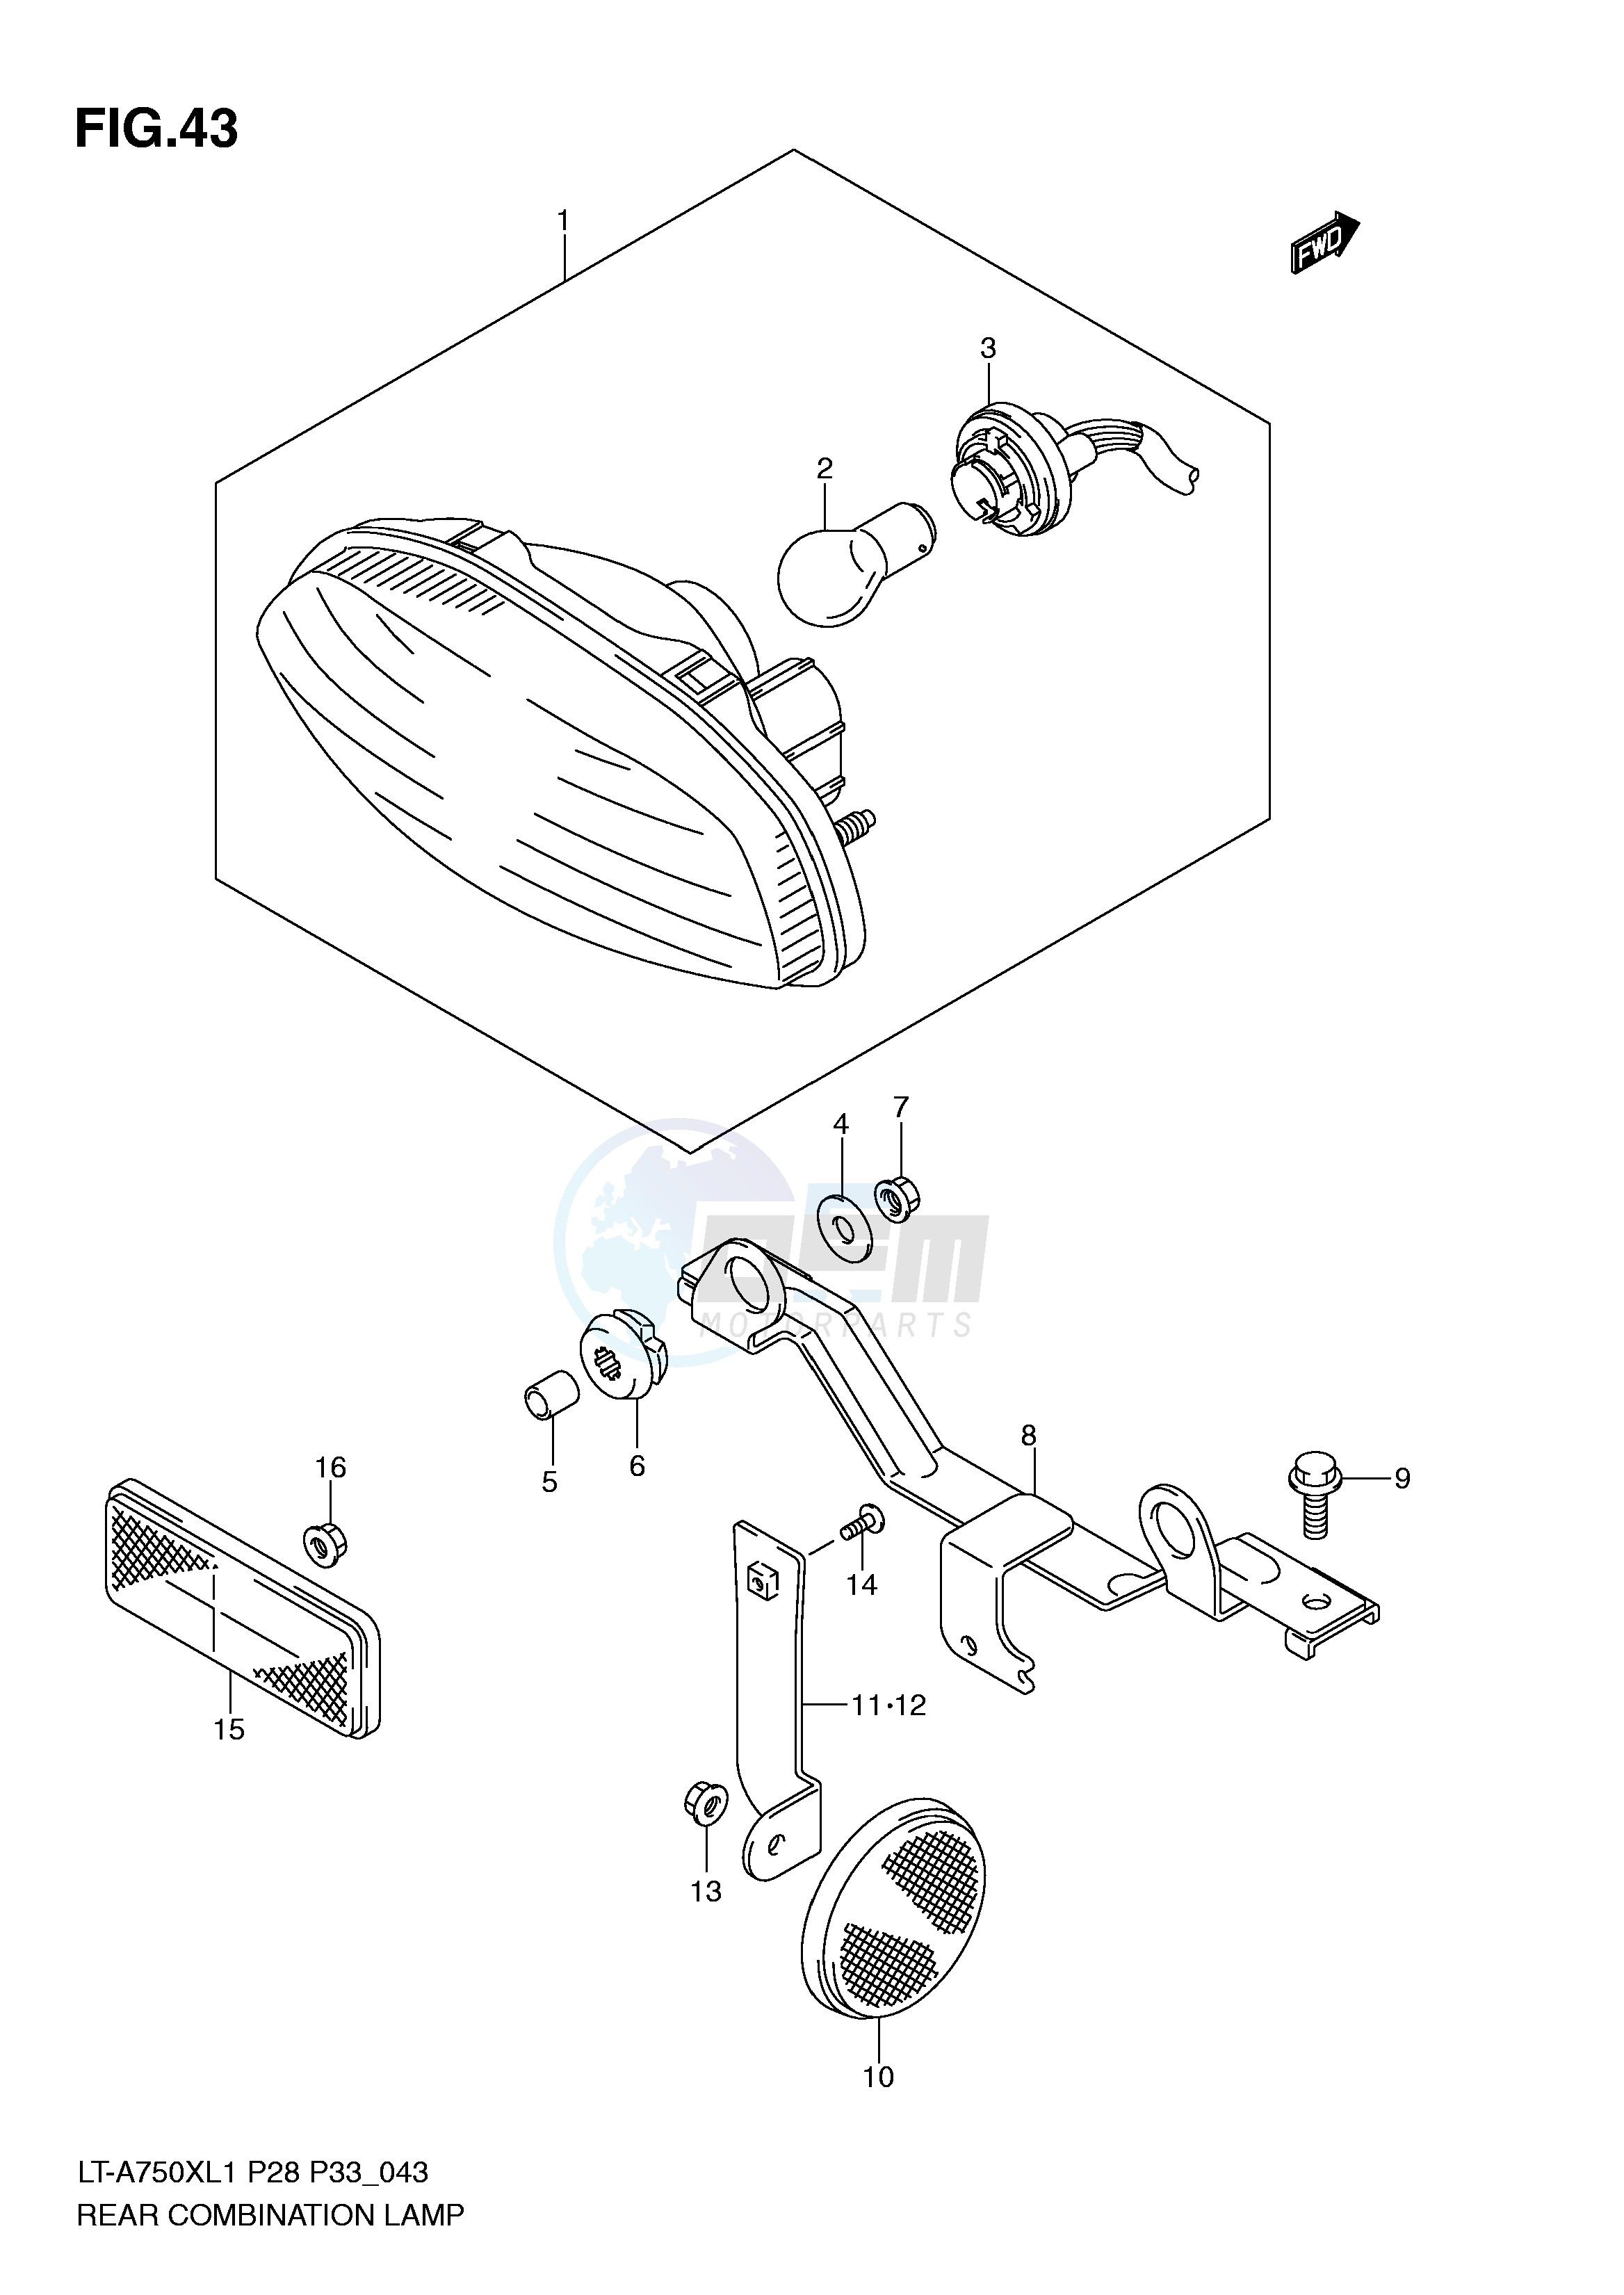 REAR COMBINATION LAMP (LT-A750XL1 P28) blueprint